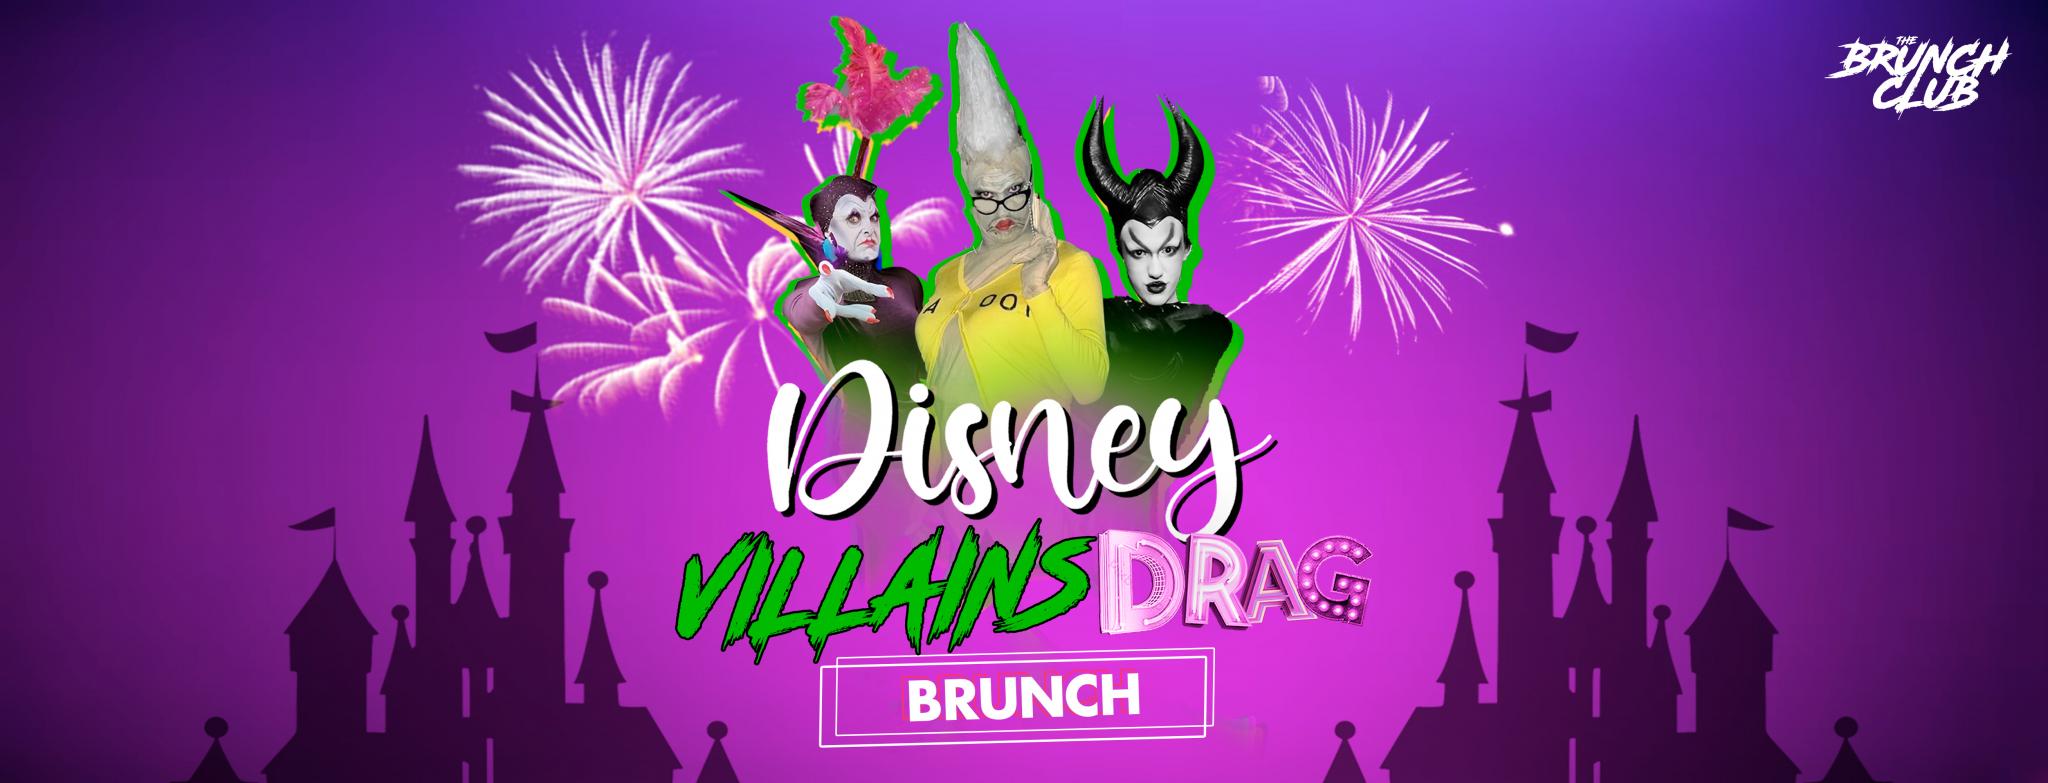 Disney Villains Drag Bottomless Brunch - Cambridge